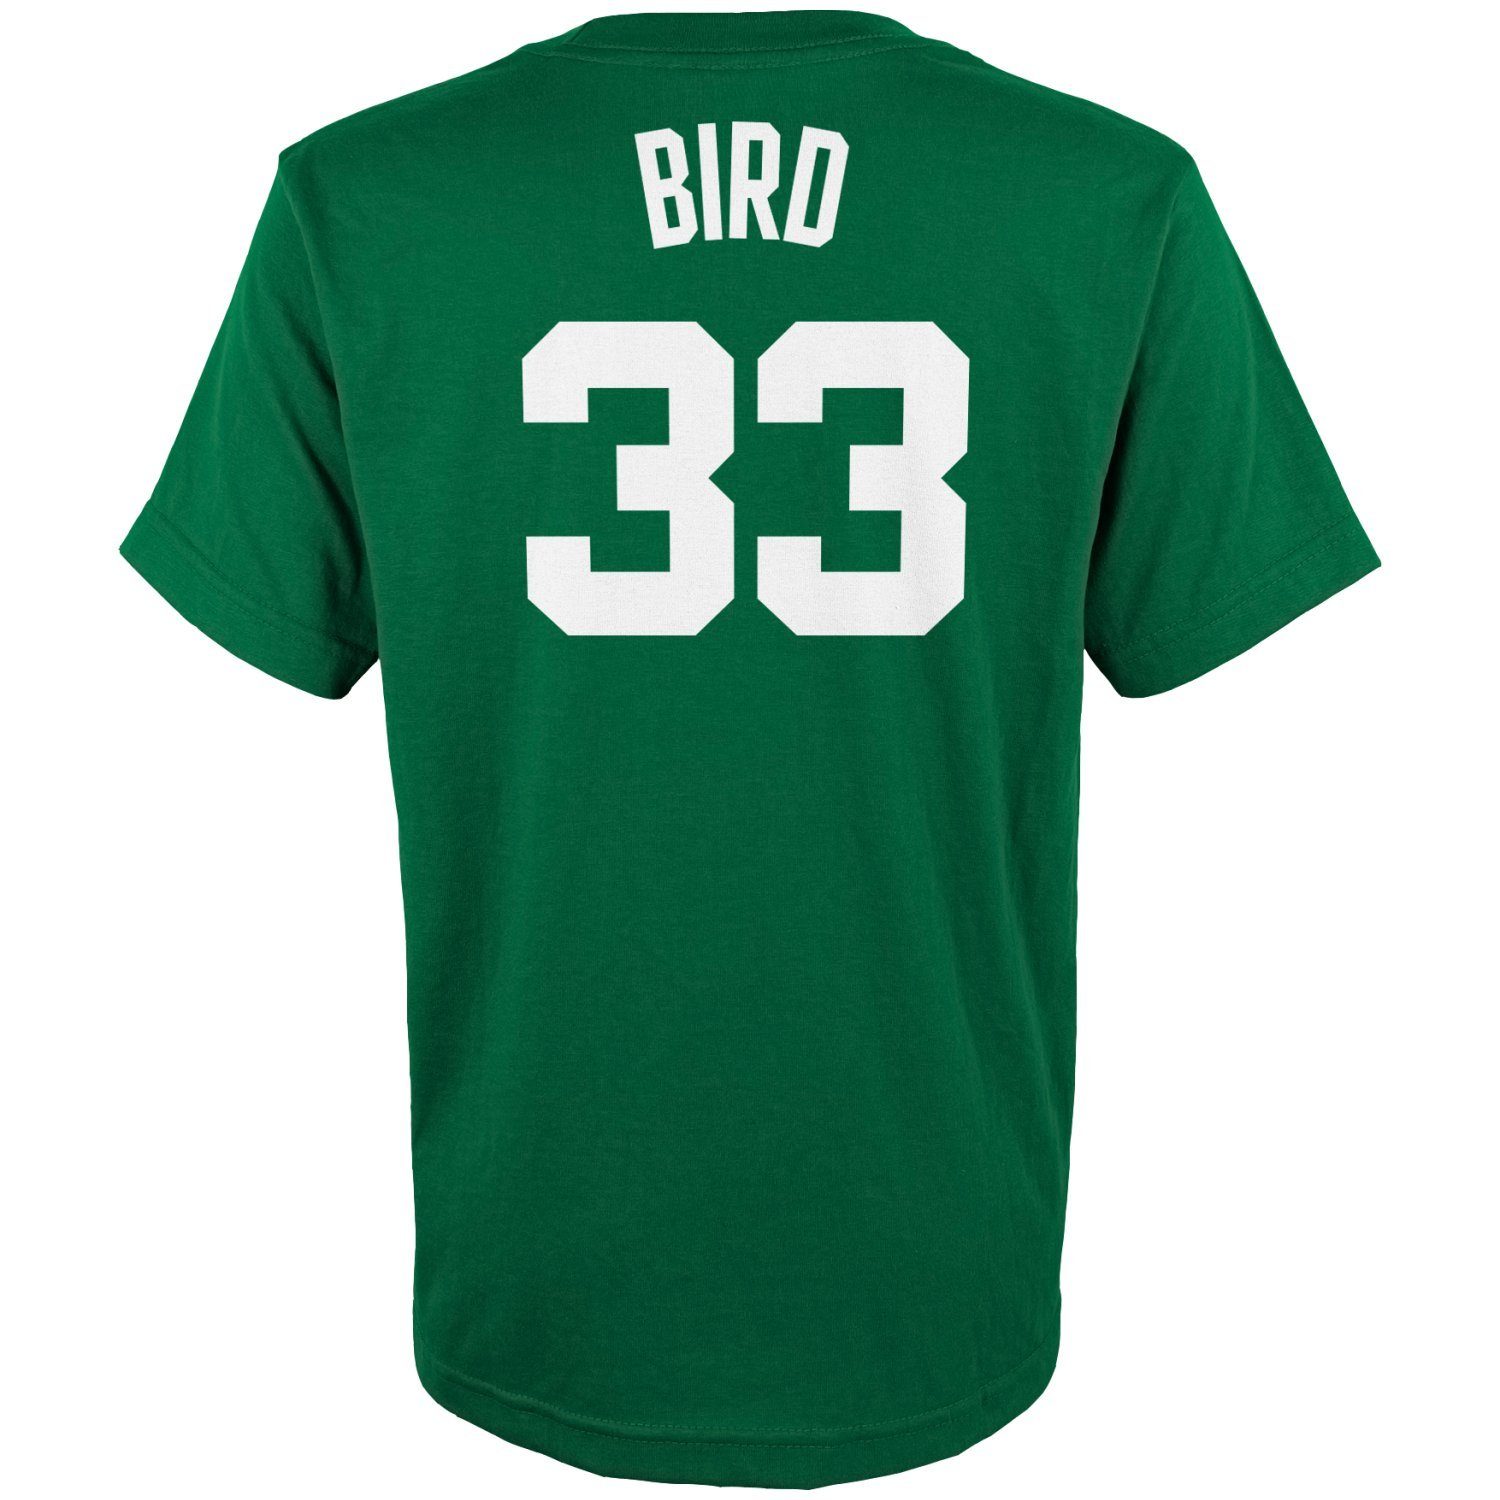 Mitchell Celtics & Boston Print-Shirt Ness Bird Larry